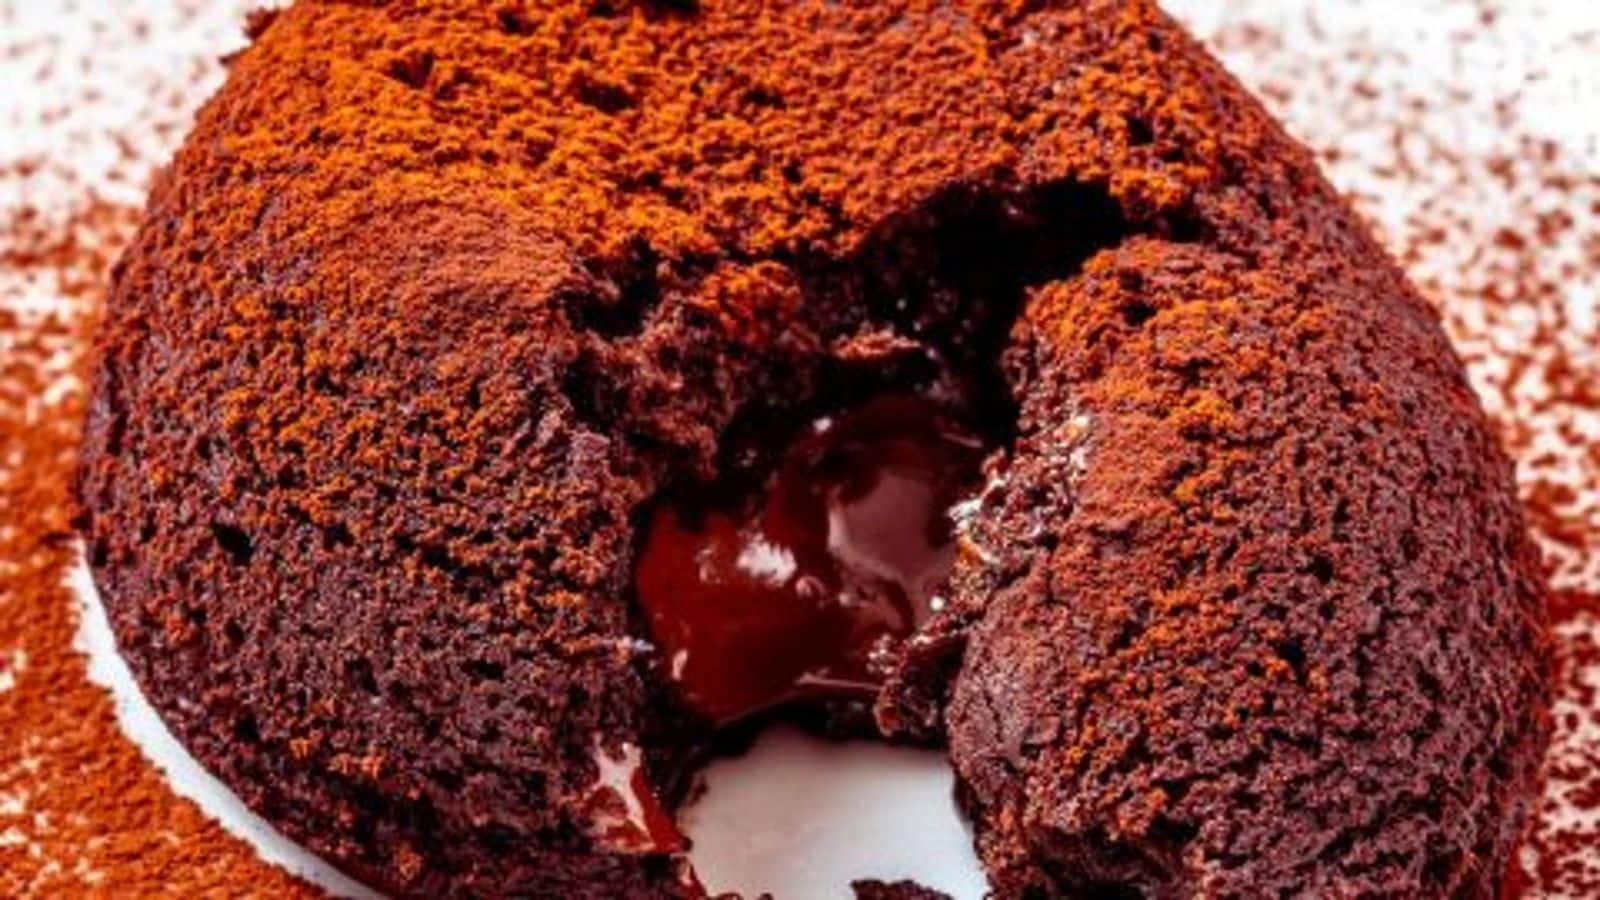 It's recipe time! Make this vegan chocolate lava cake